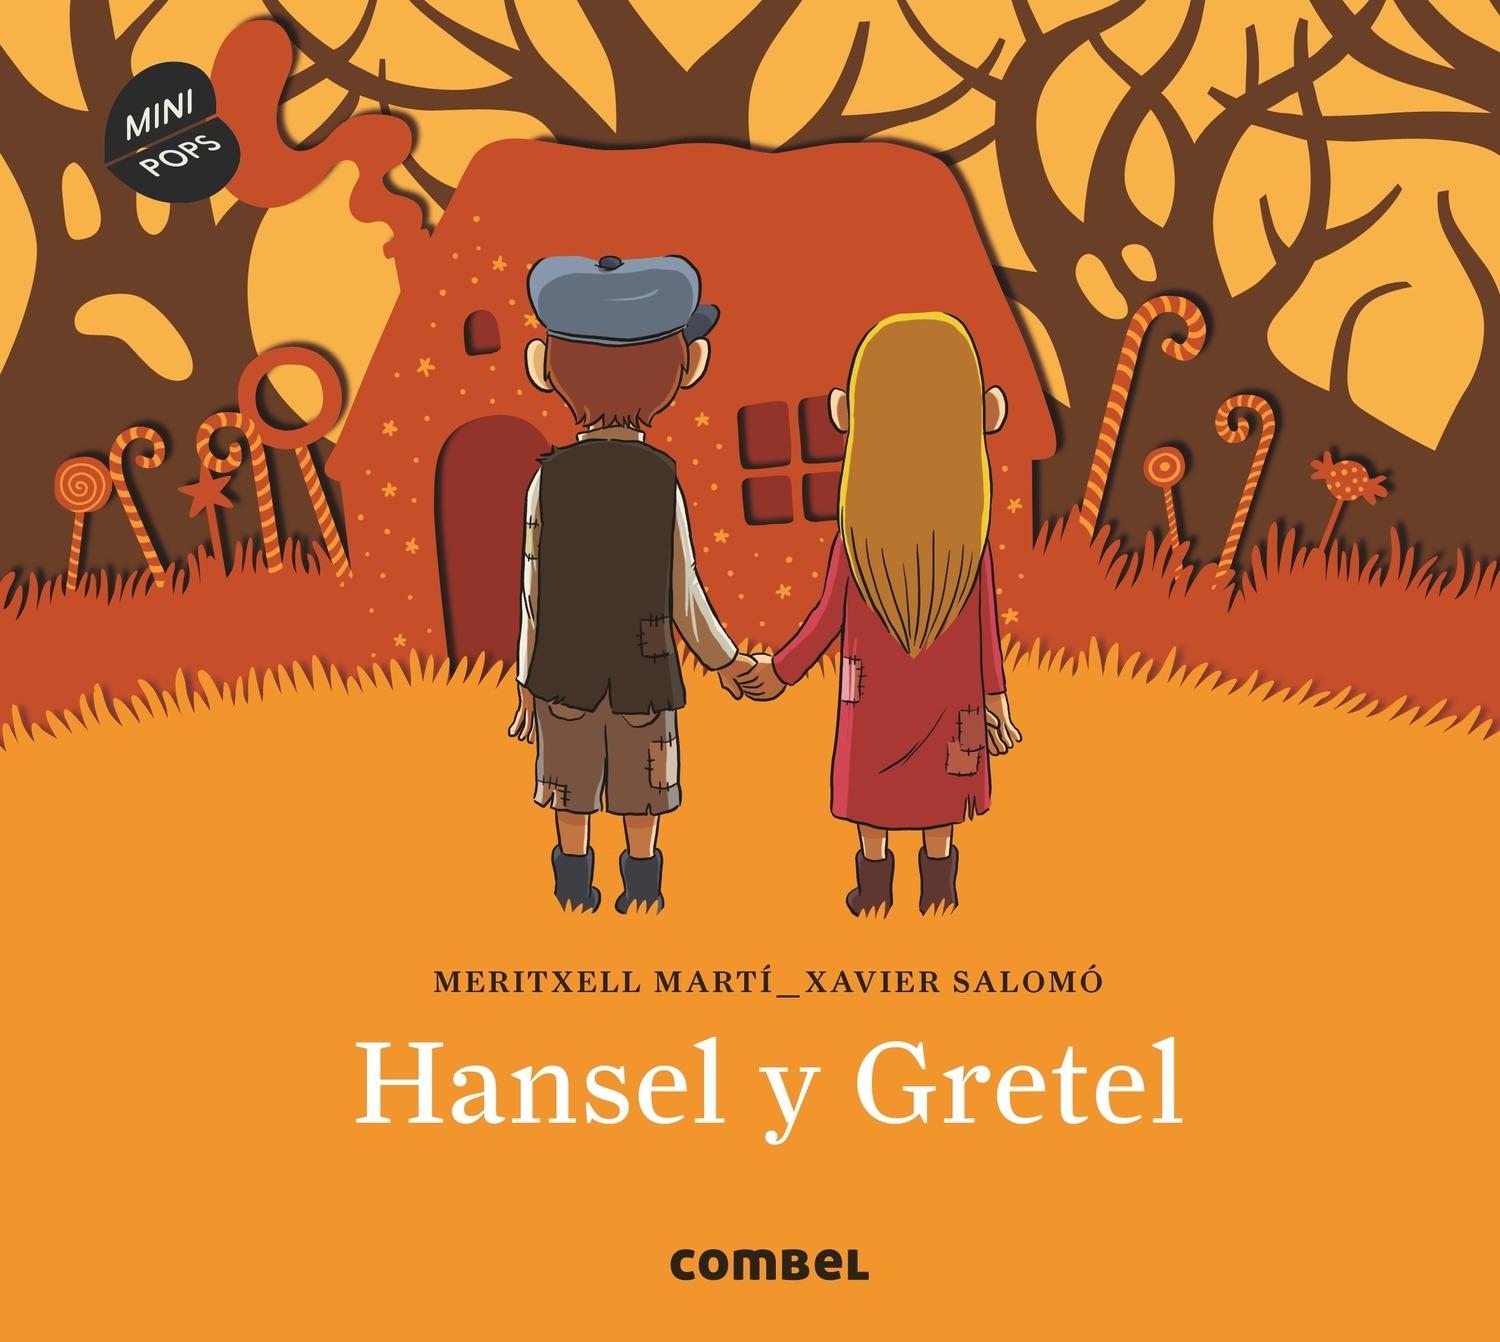 Hansel y Gretel "Mini pops"